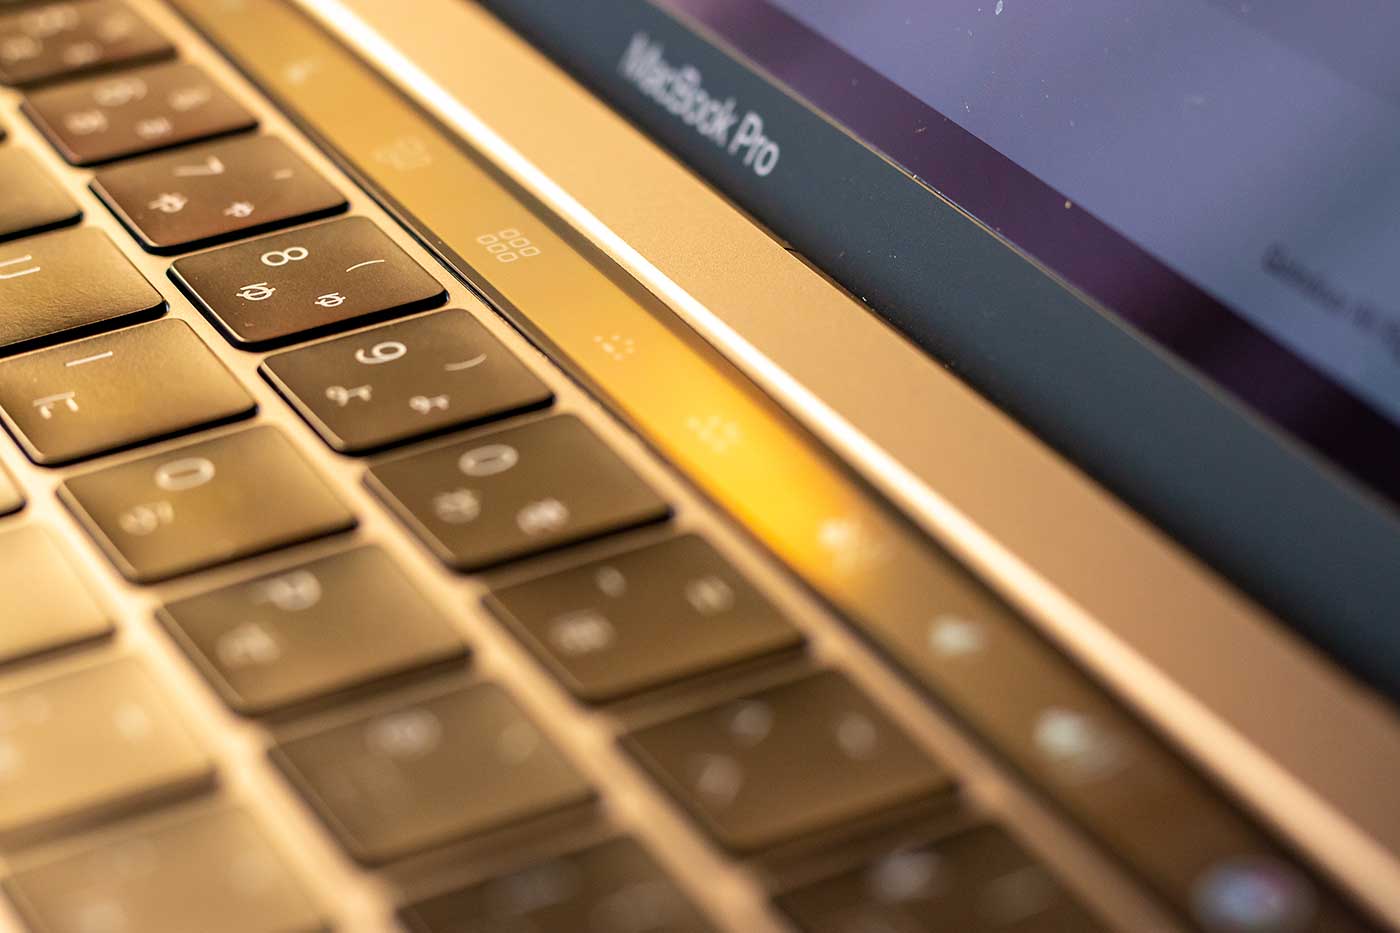 MacBookProのキーボード